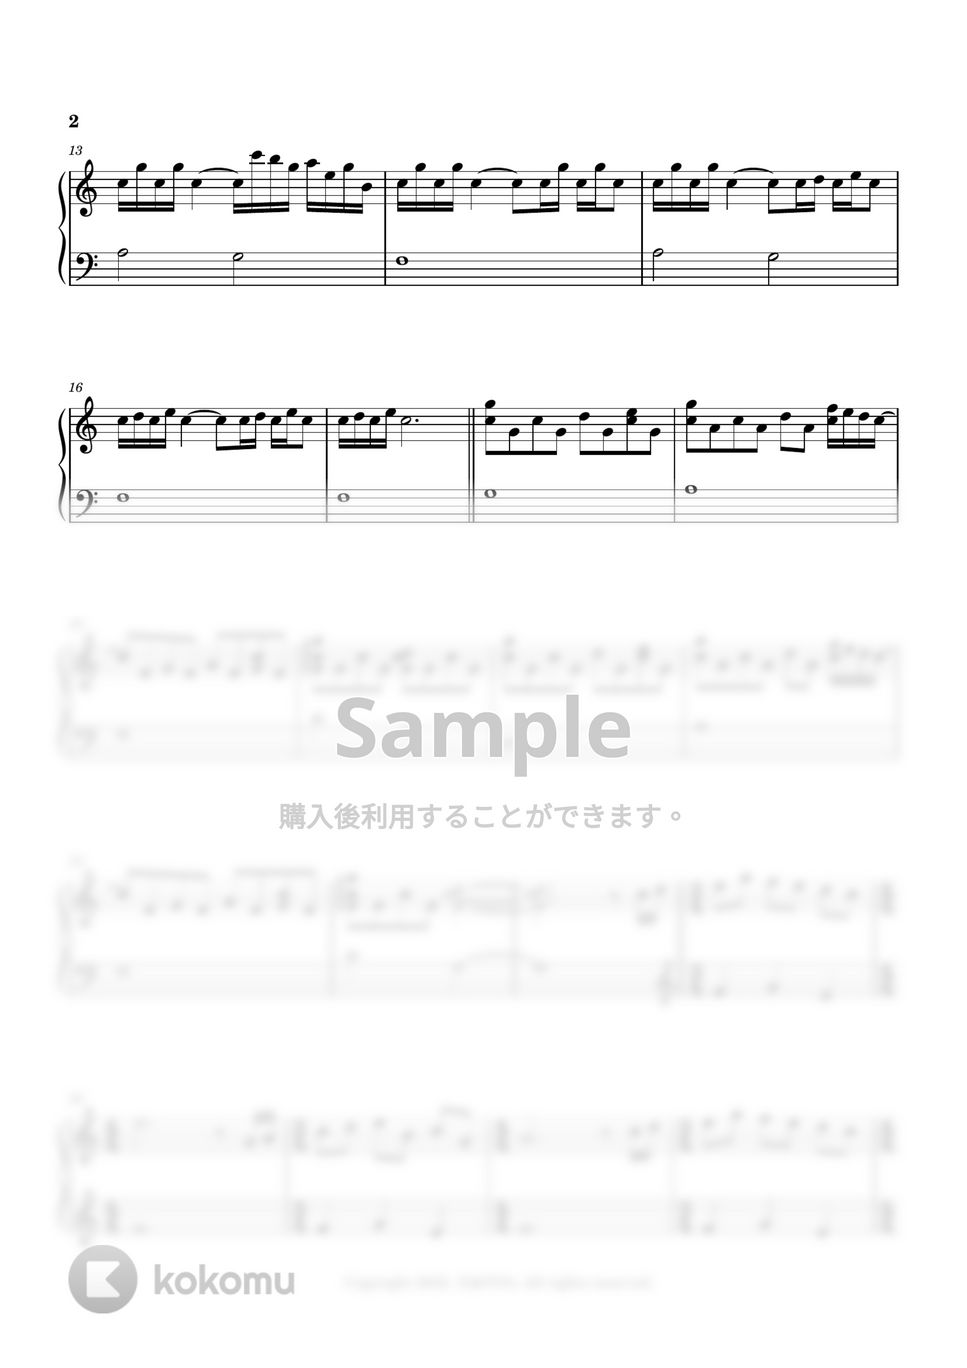 RADWIMPS - 三葉のテーマ(Theme of Mitsuha) (君の名は ost track 21) by 今日ピアノ(Oneul Piano)